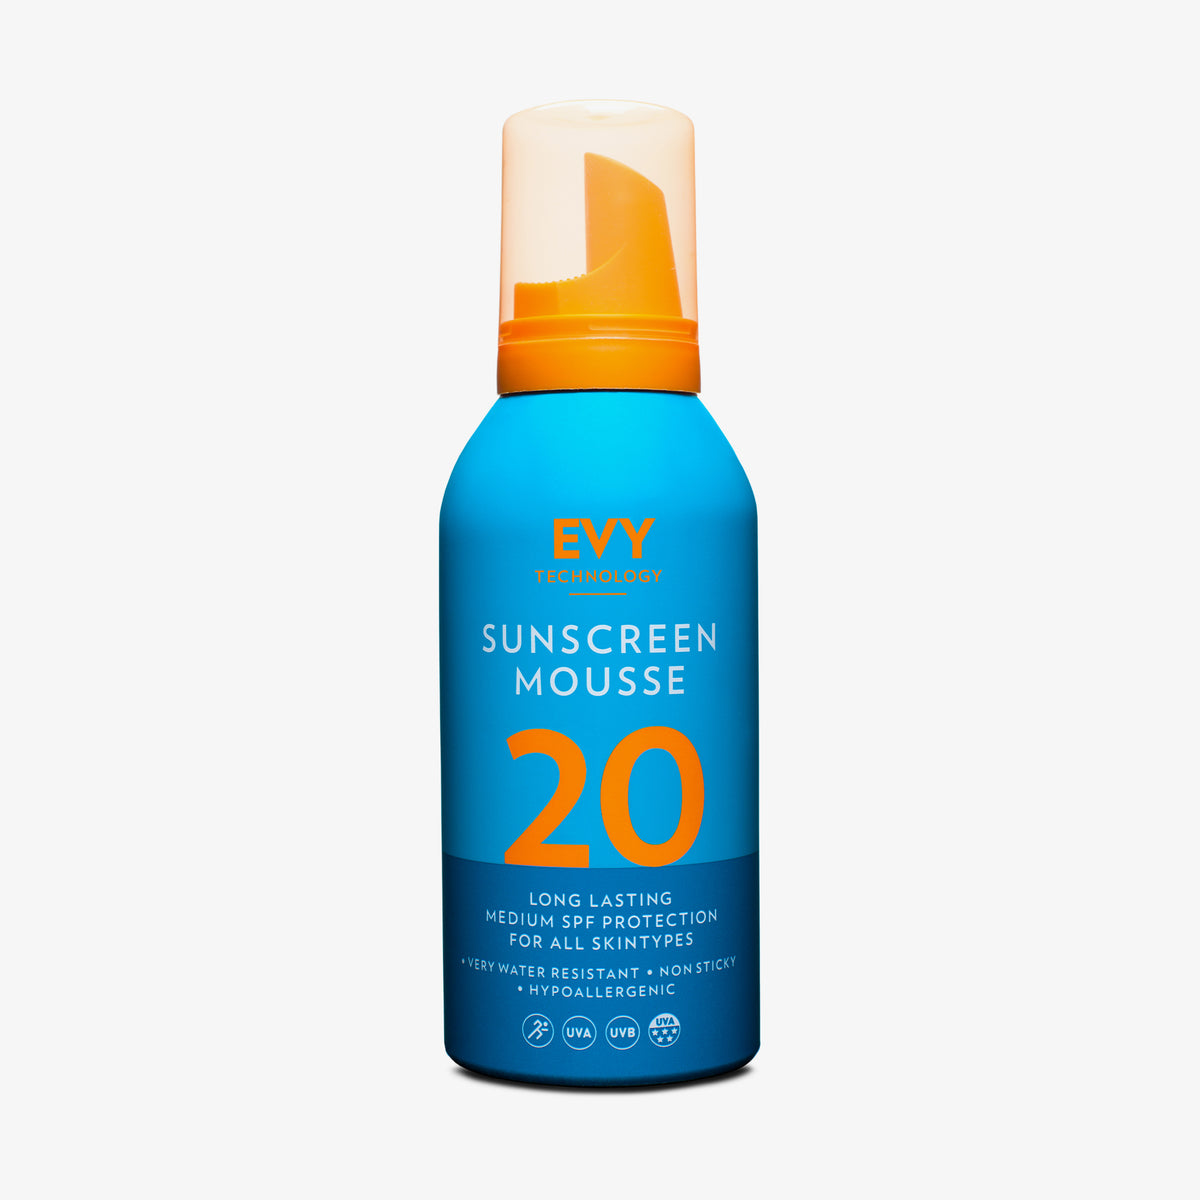 Sunscreen Mousse SPF 20